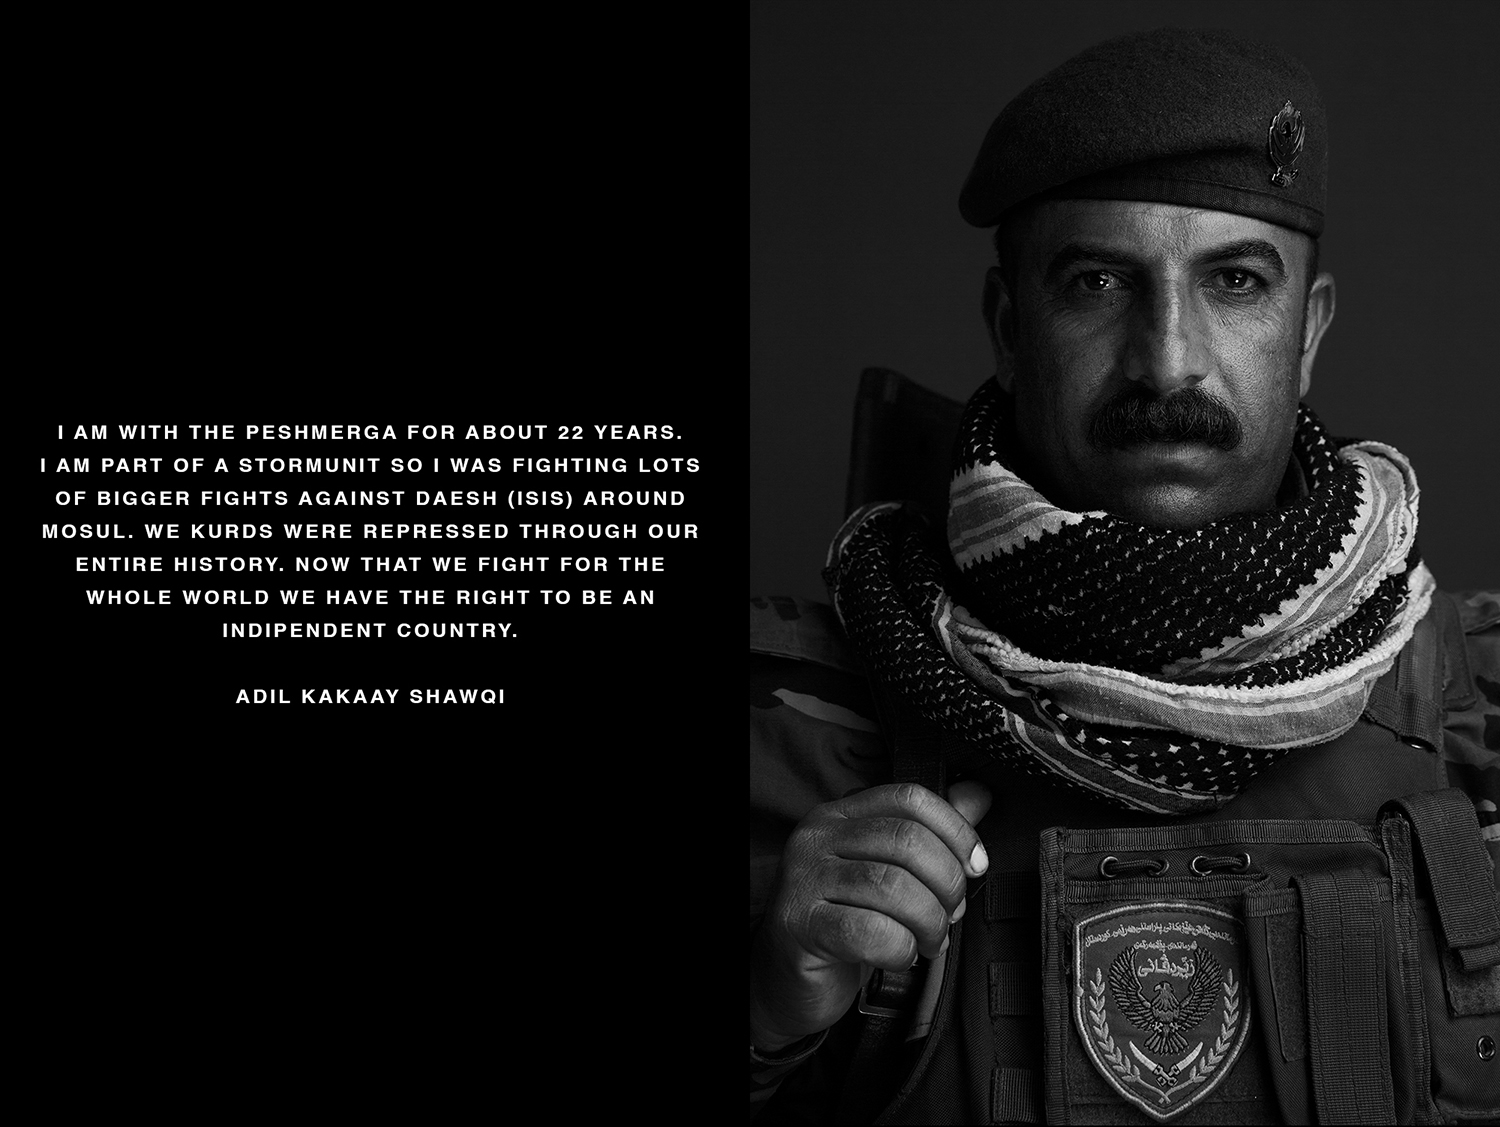 Portrait and Interview of a kurdish Peshmerga Soldier